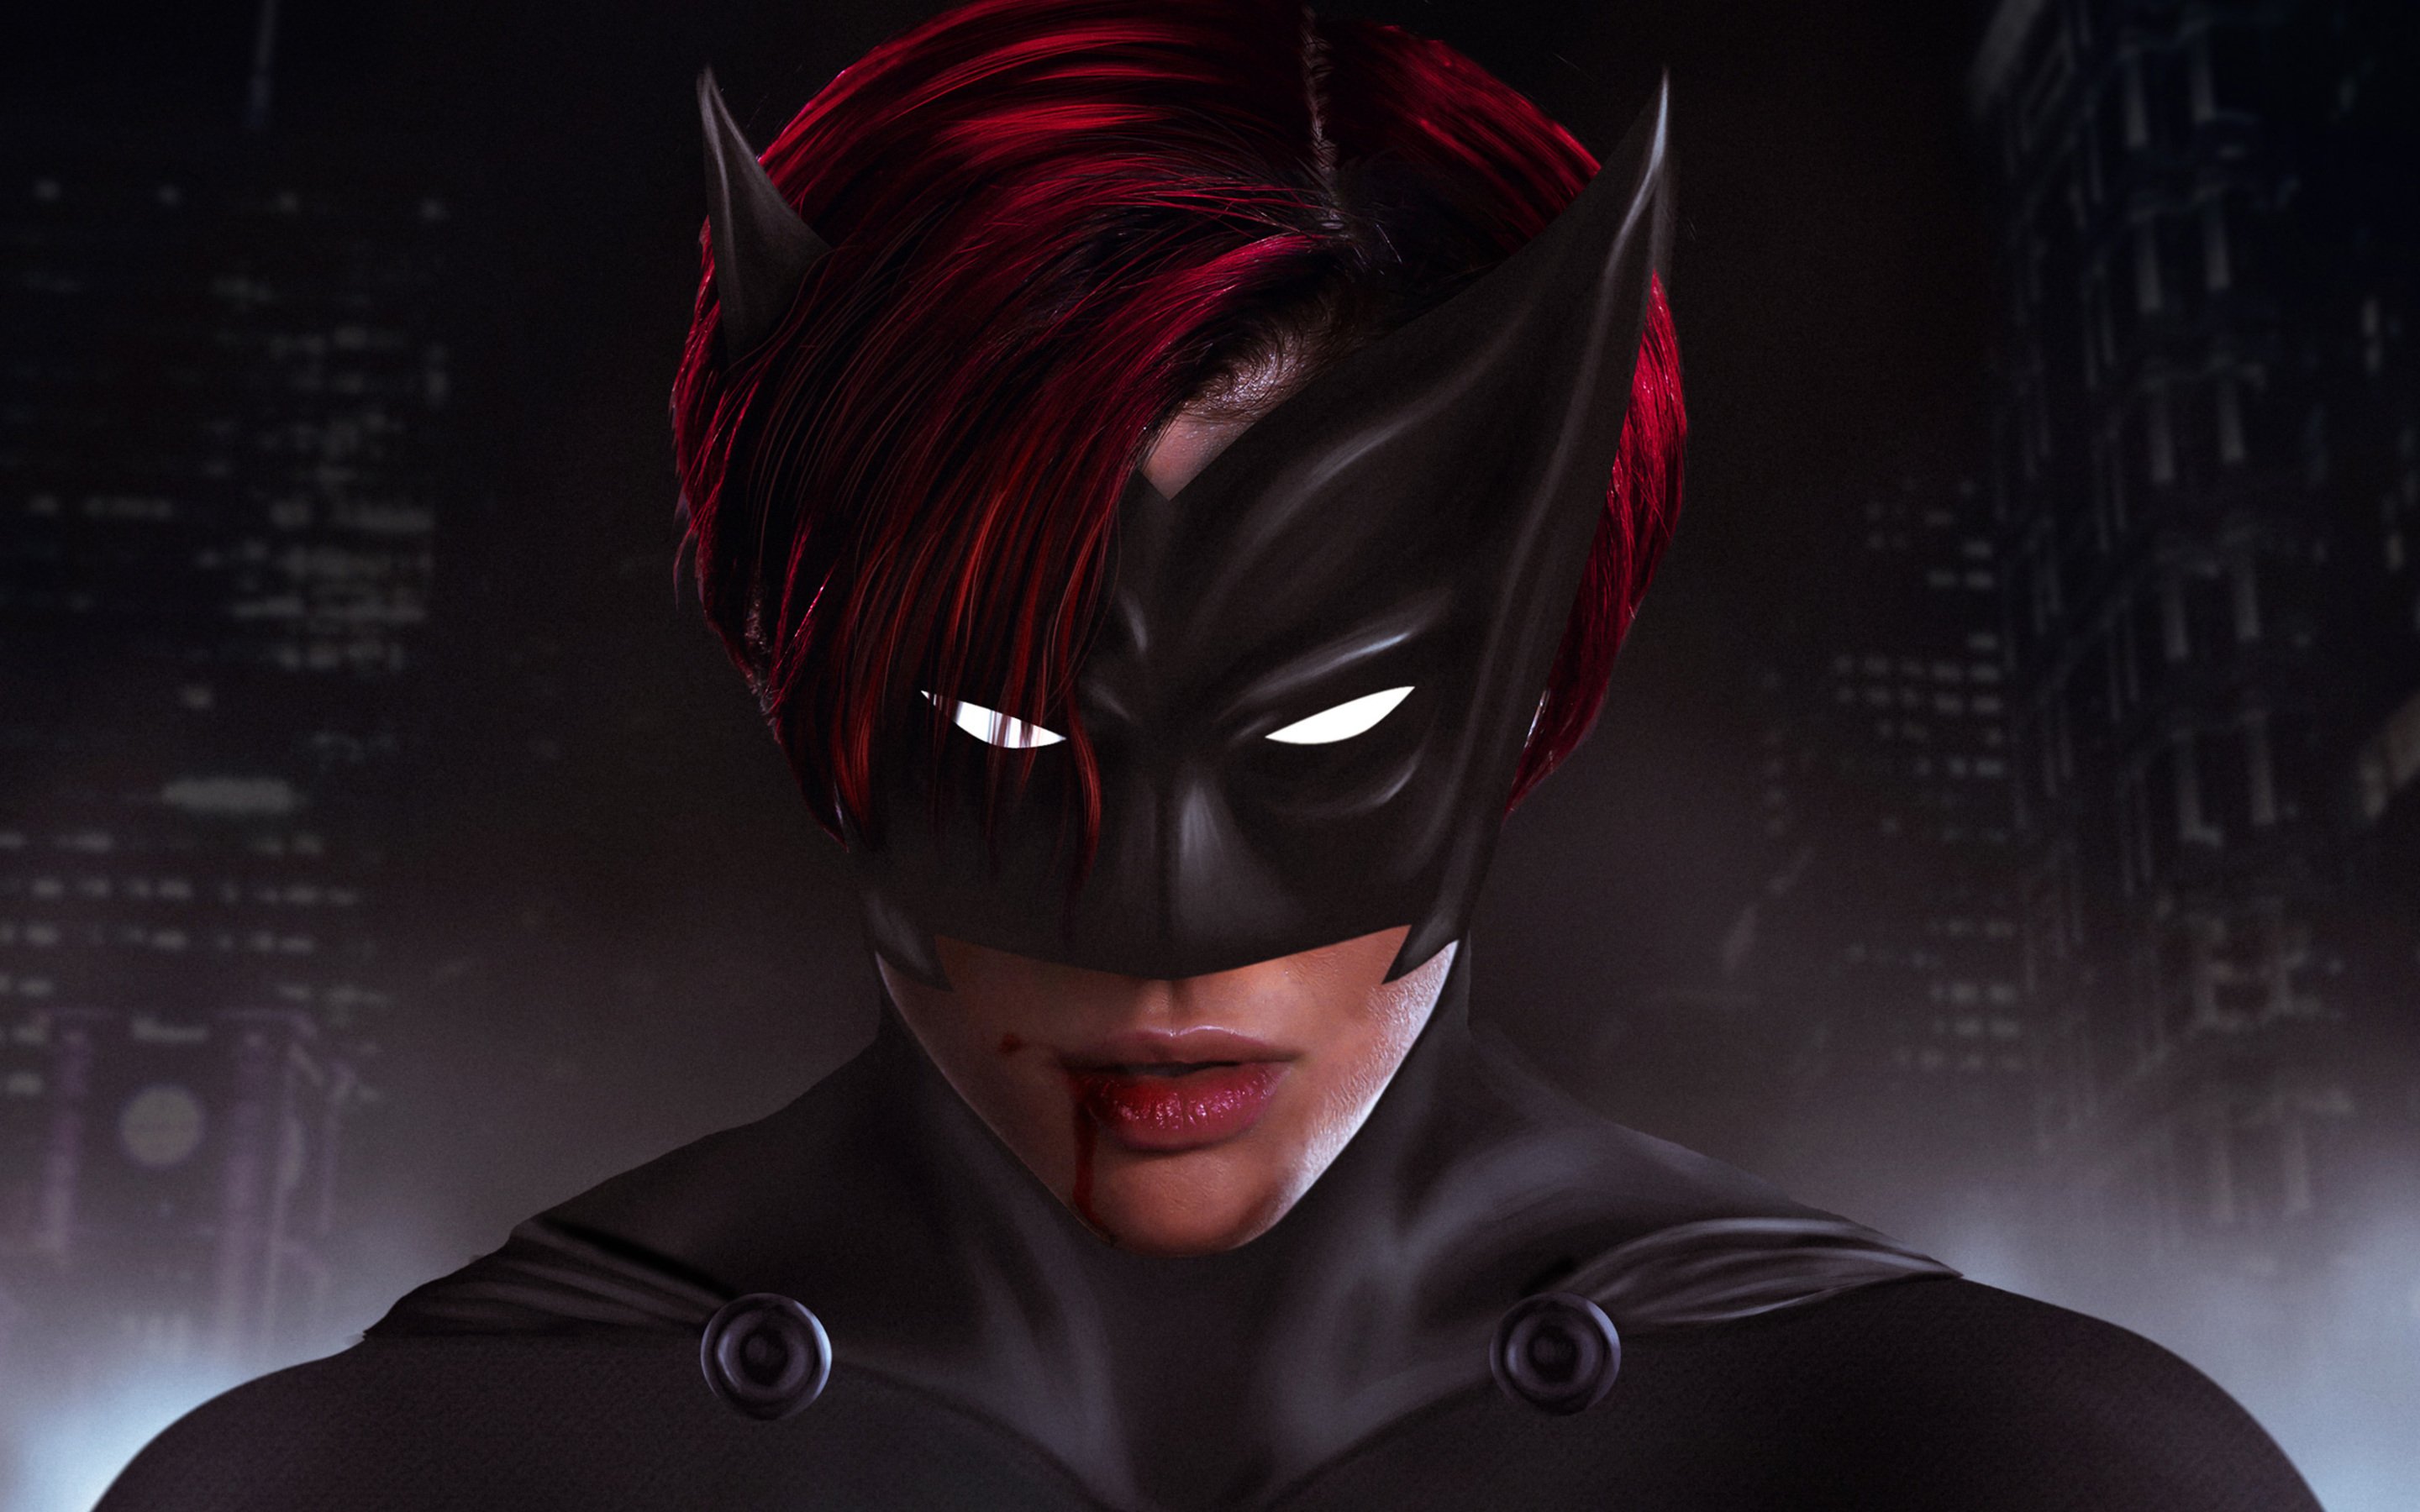 Download wallpaper Batwoman, creative, fan art, superheroes, DC